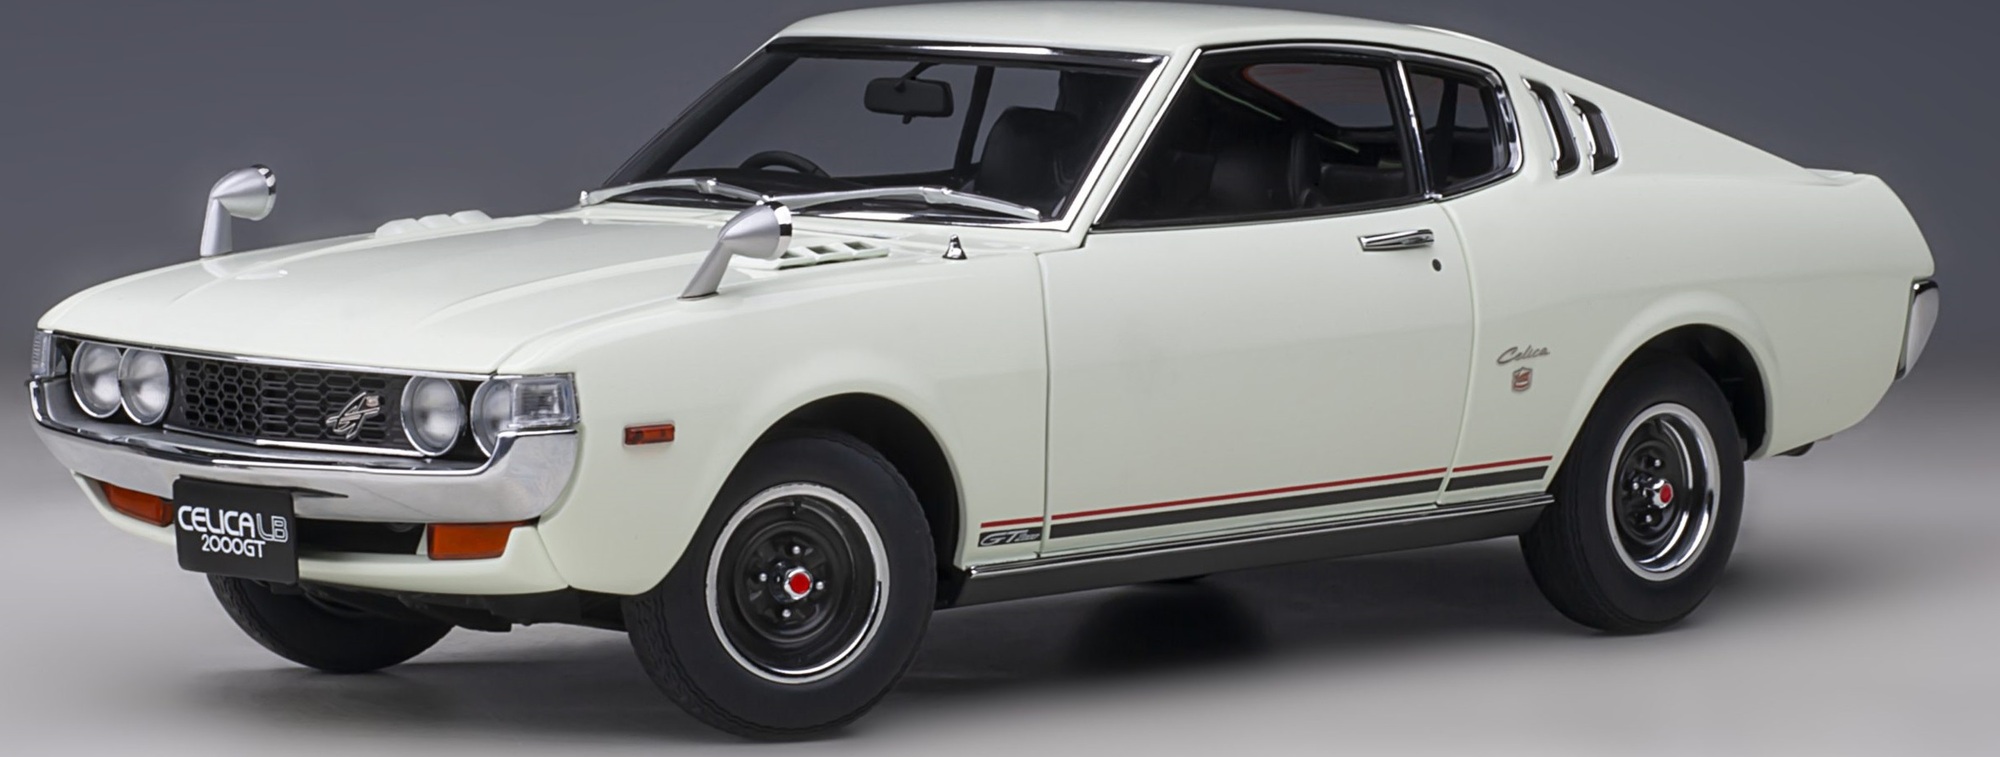 1:18 Toyota Celica Liftback 2000 GT (RA25) 1973 (w